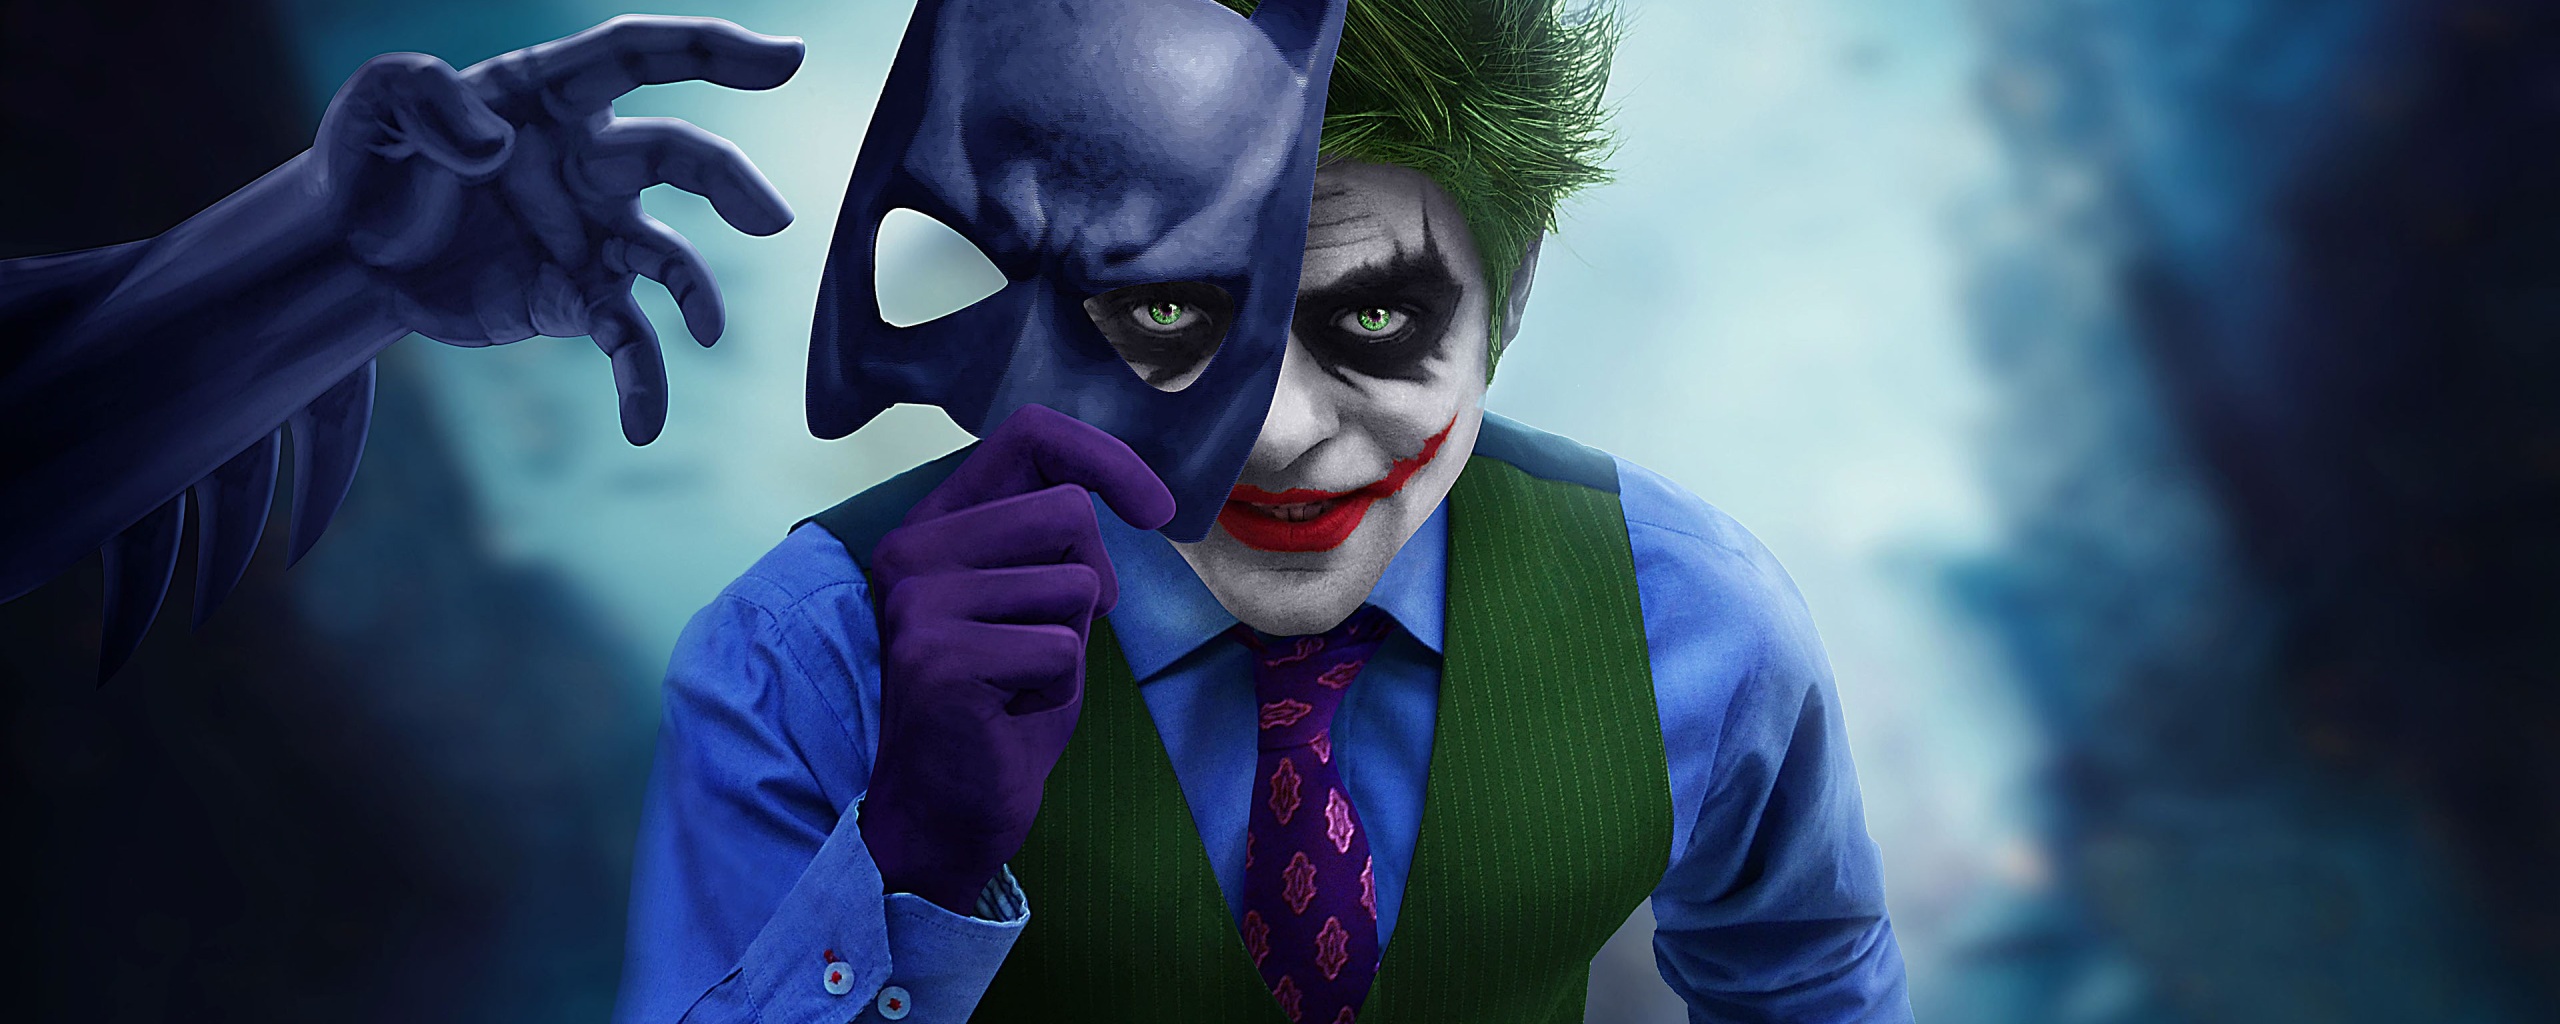 Joker With Batman Mask Off - 4k Wallpapers - 40.000+ ipad wallpapers 4k ...